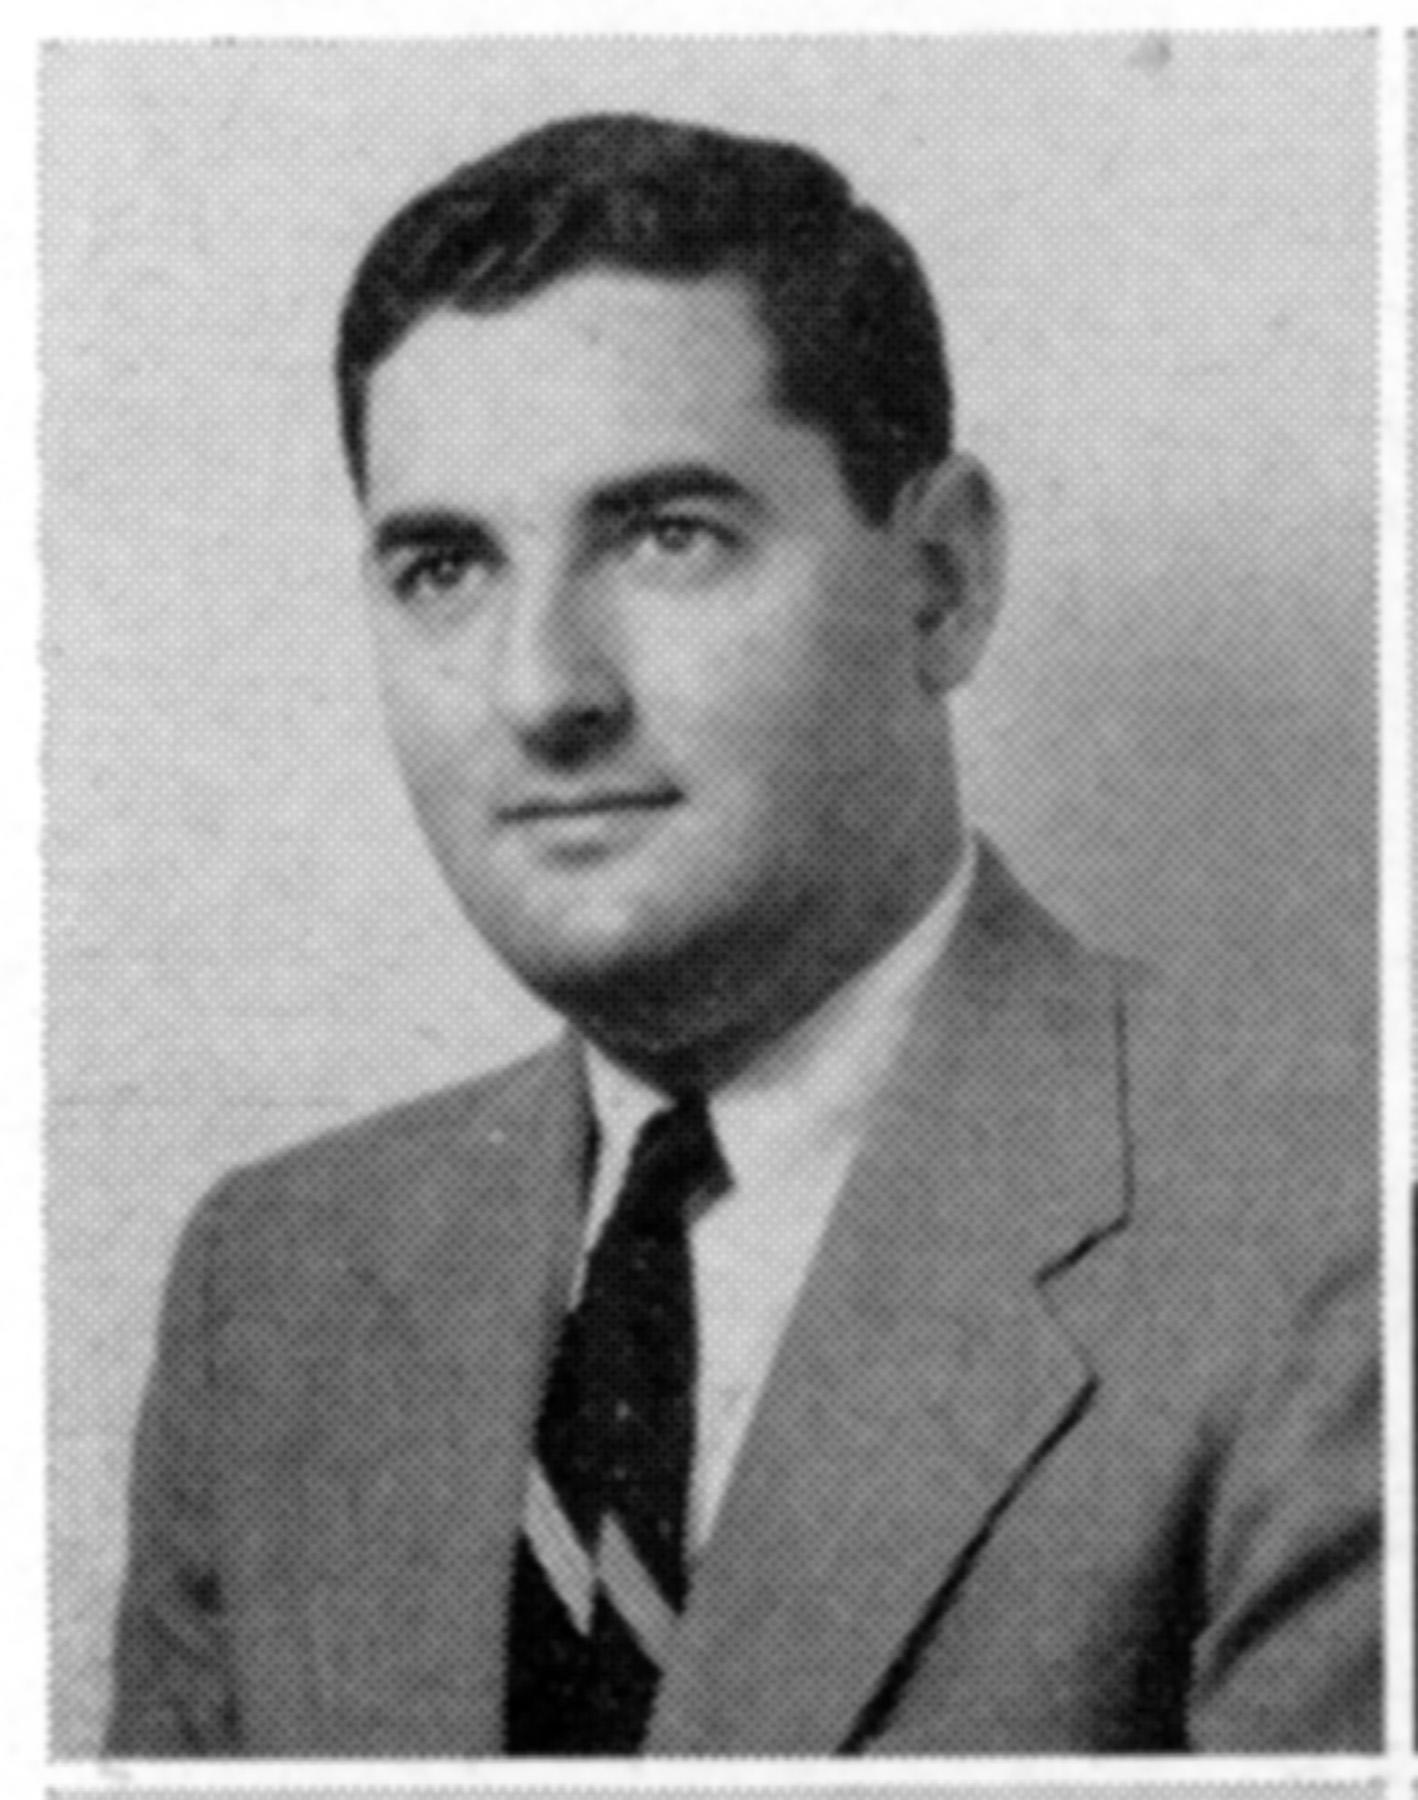 1955 yearbook photo of Arthur Greenbaum